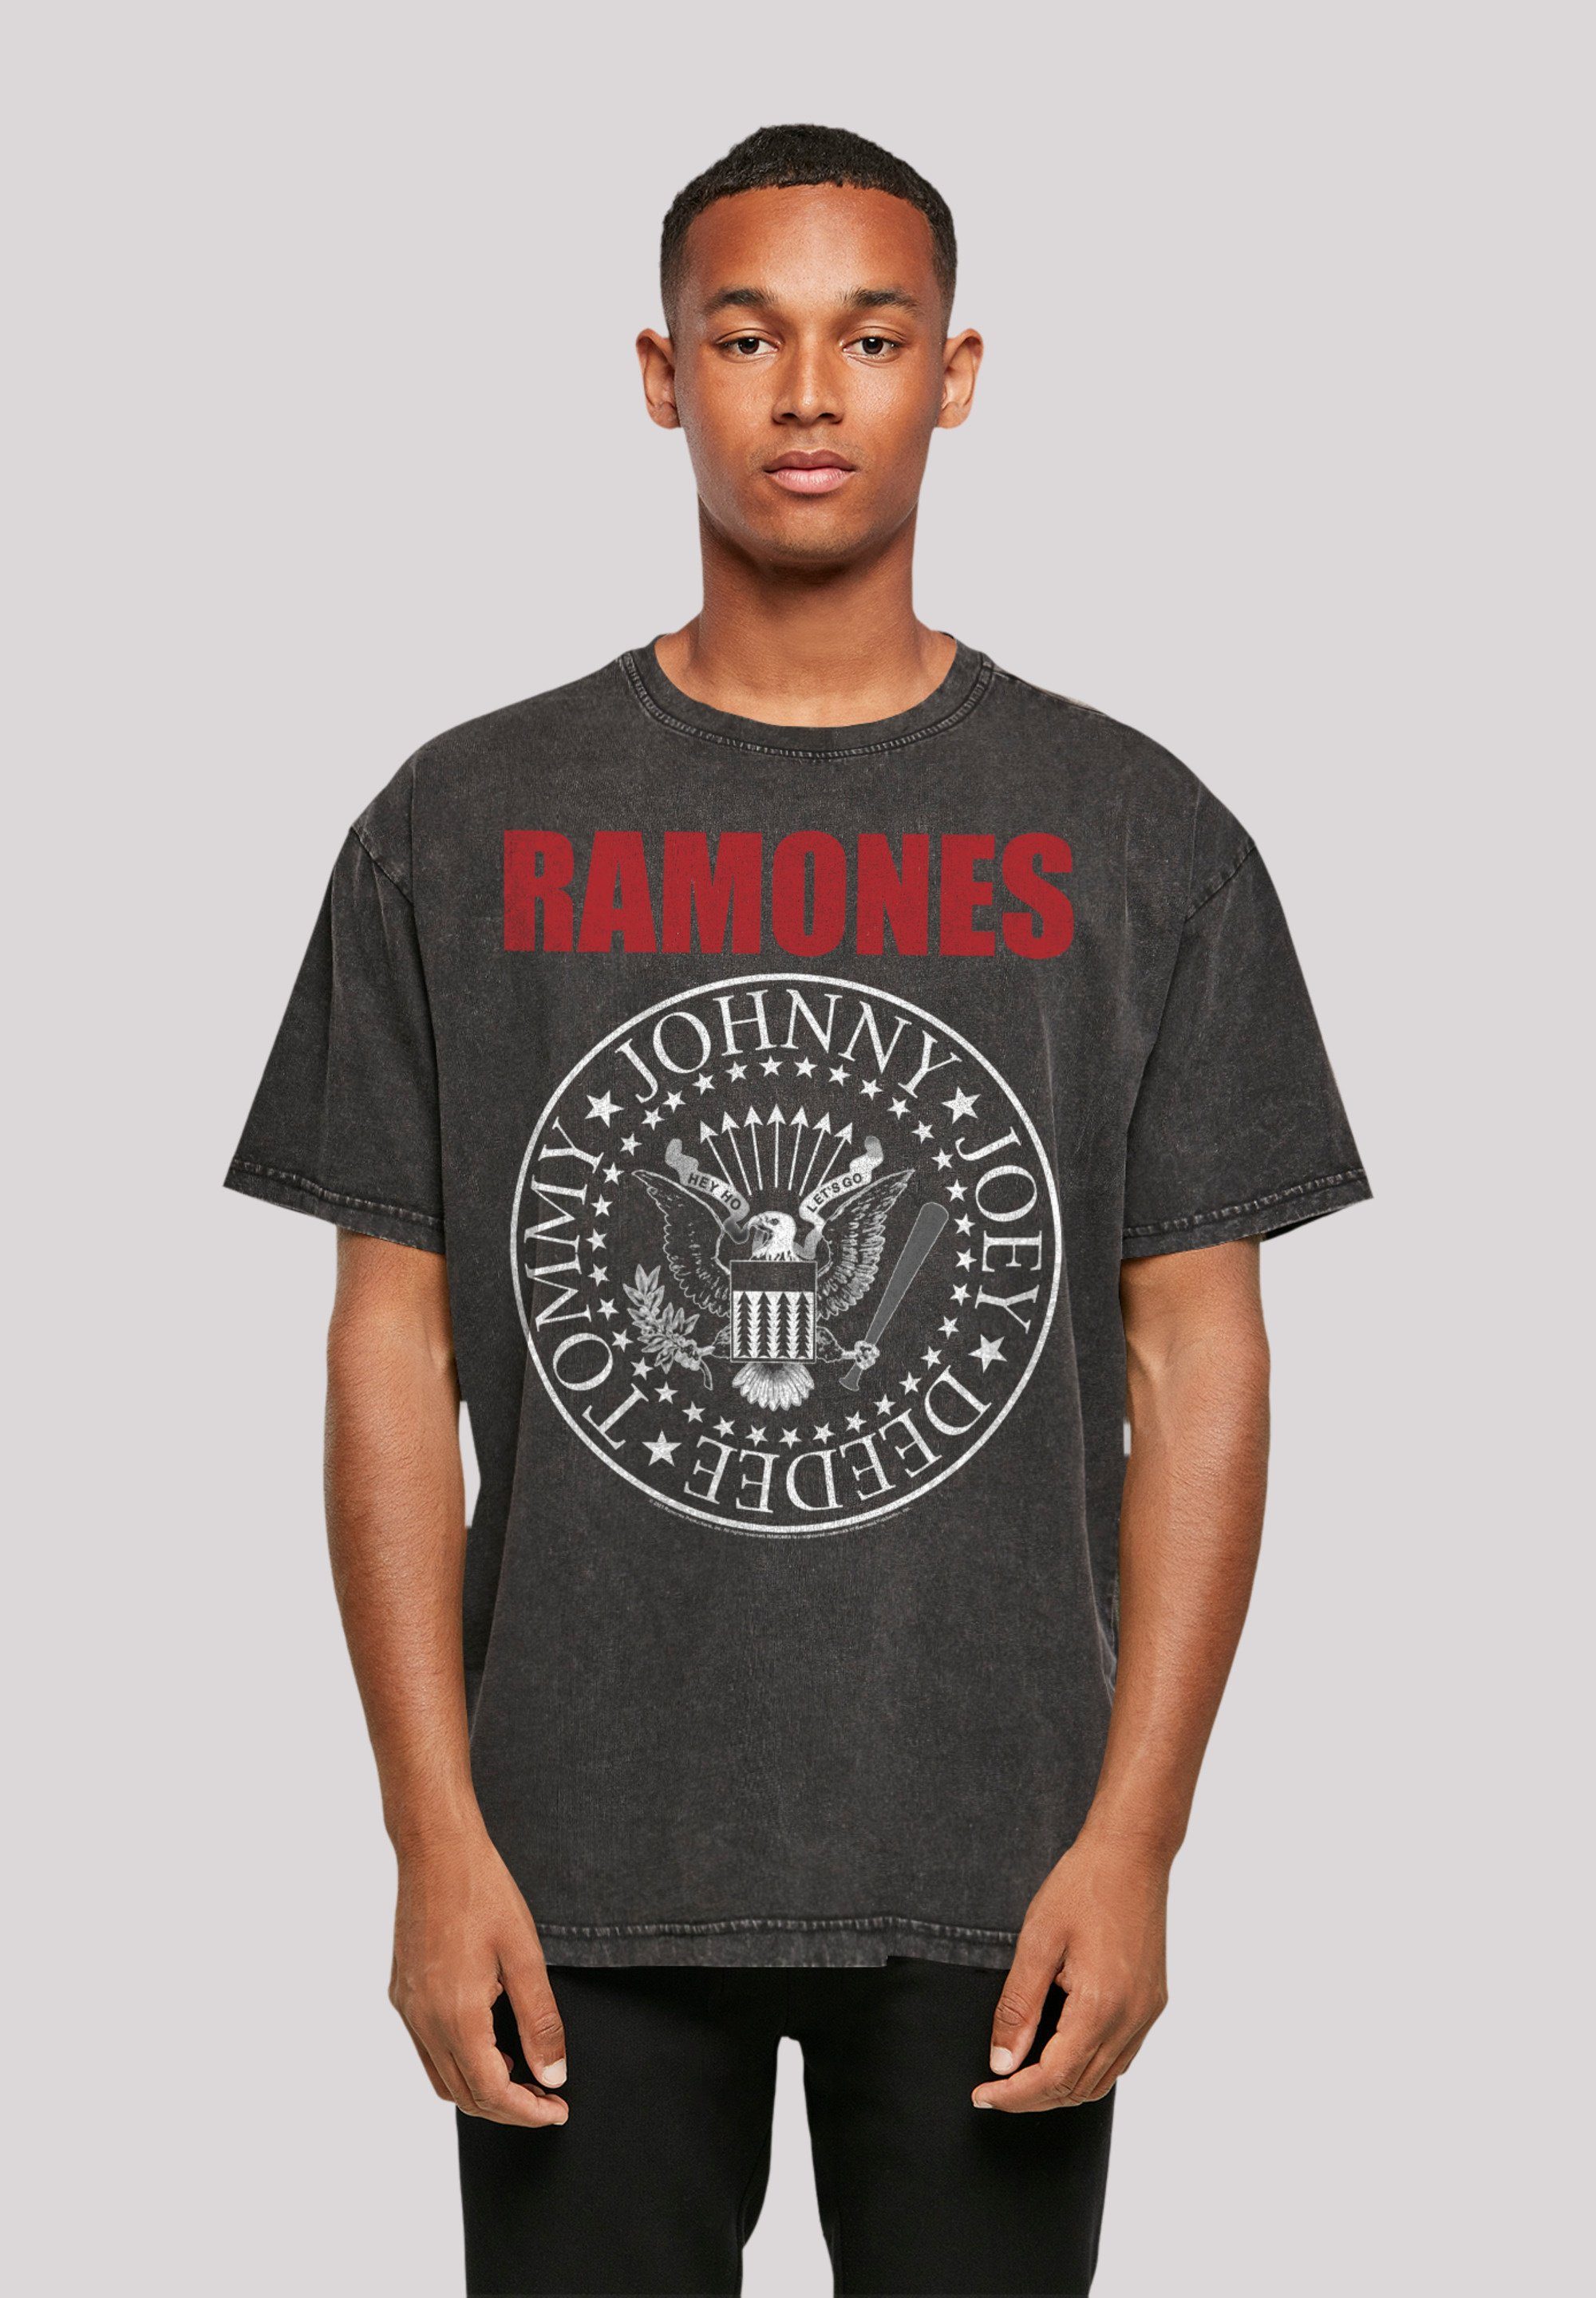 Rock Text Red T-Shirt schwarz Seal Rock-Musik Premium Ramones Qualität, Band, Musik F4NT4STIC Band